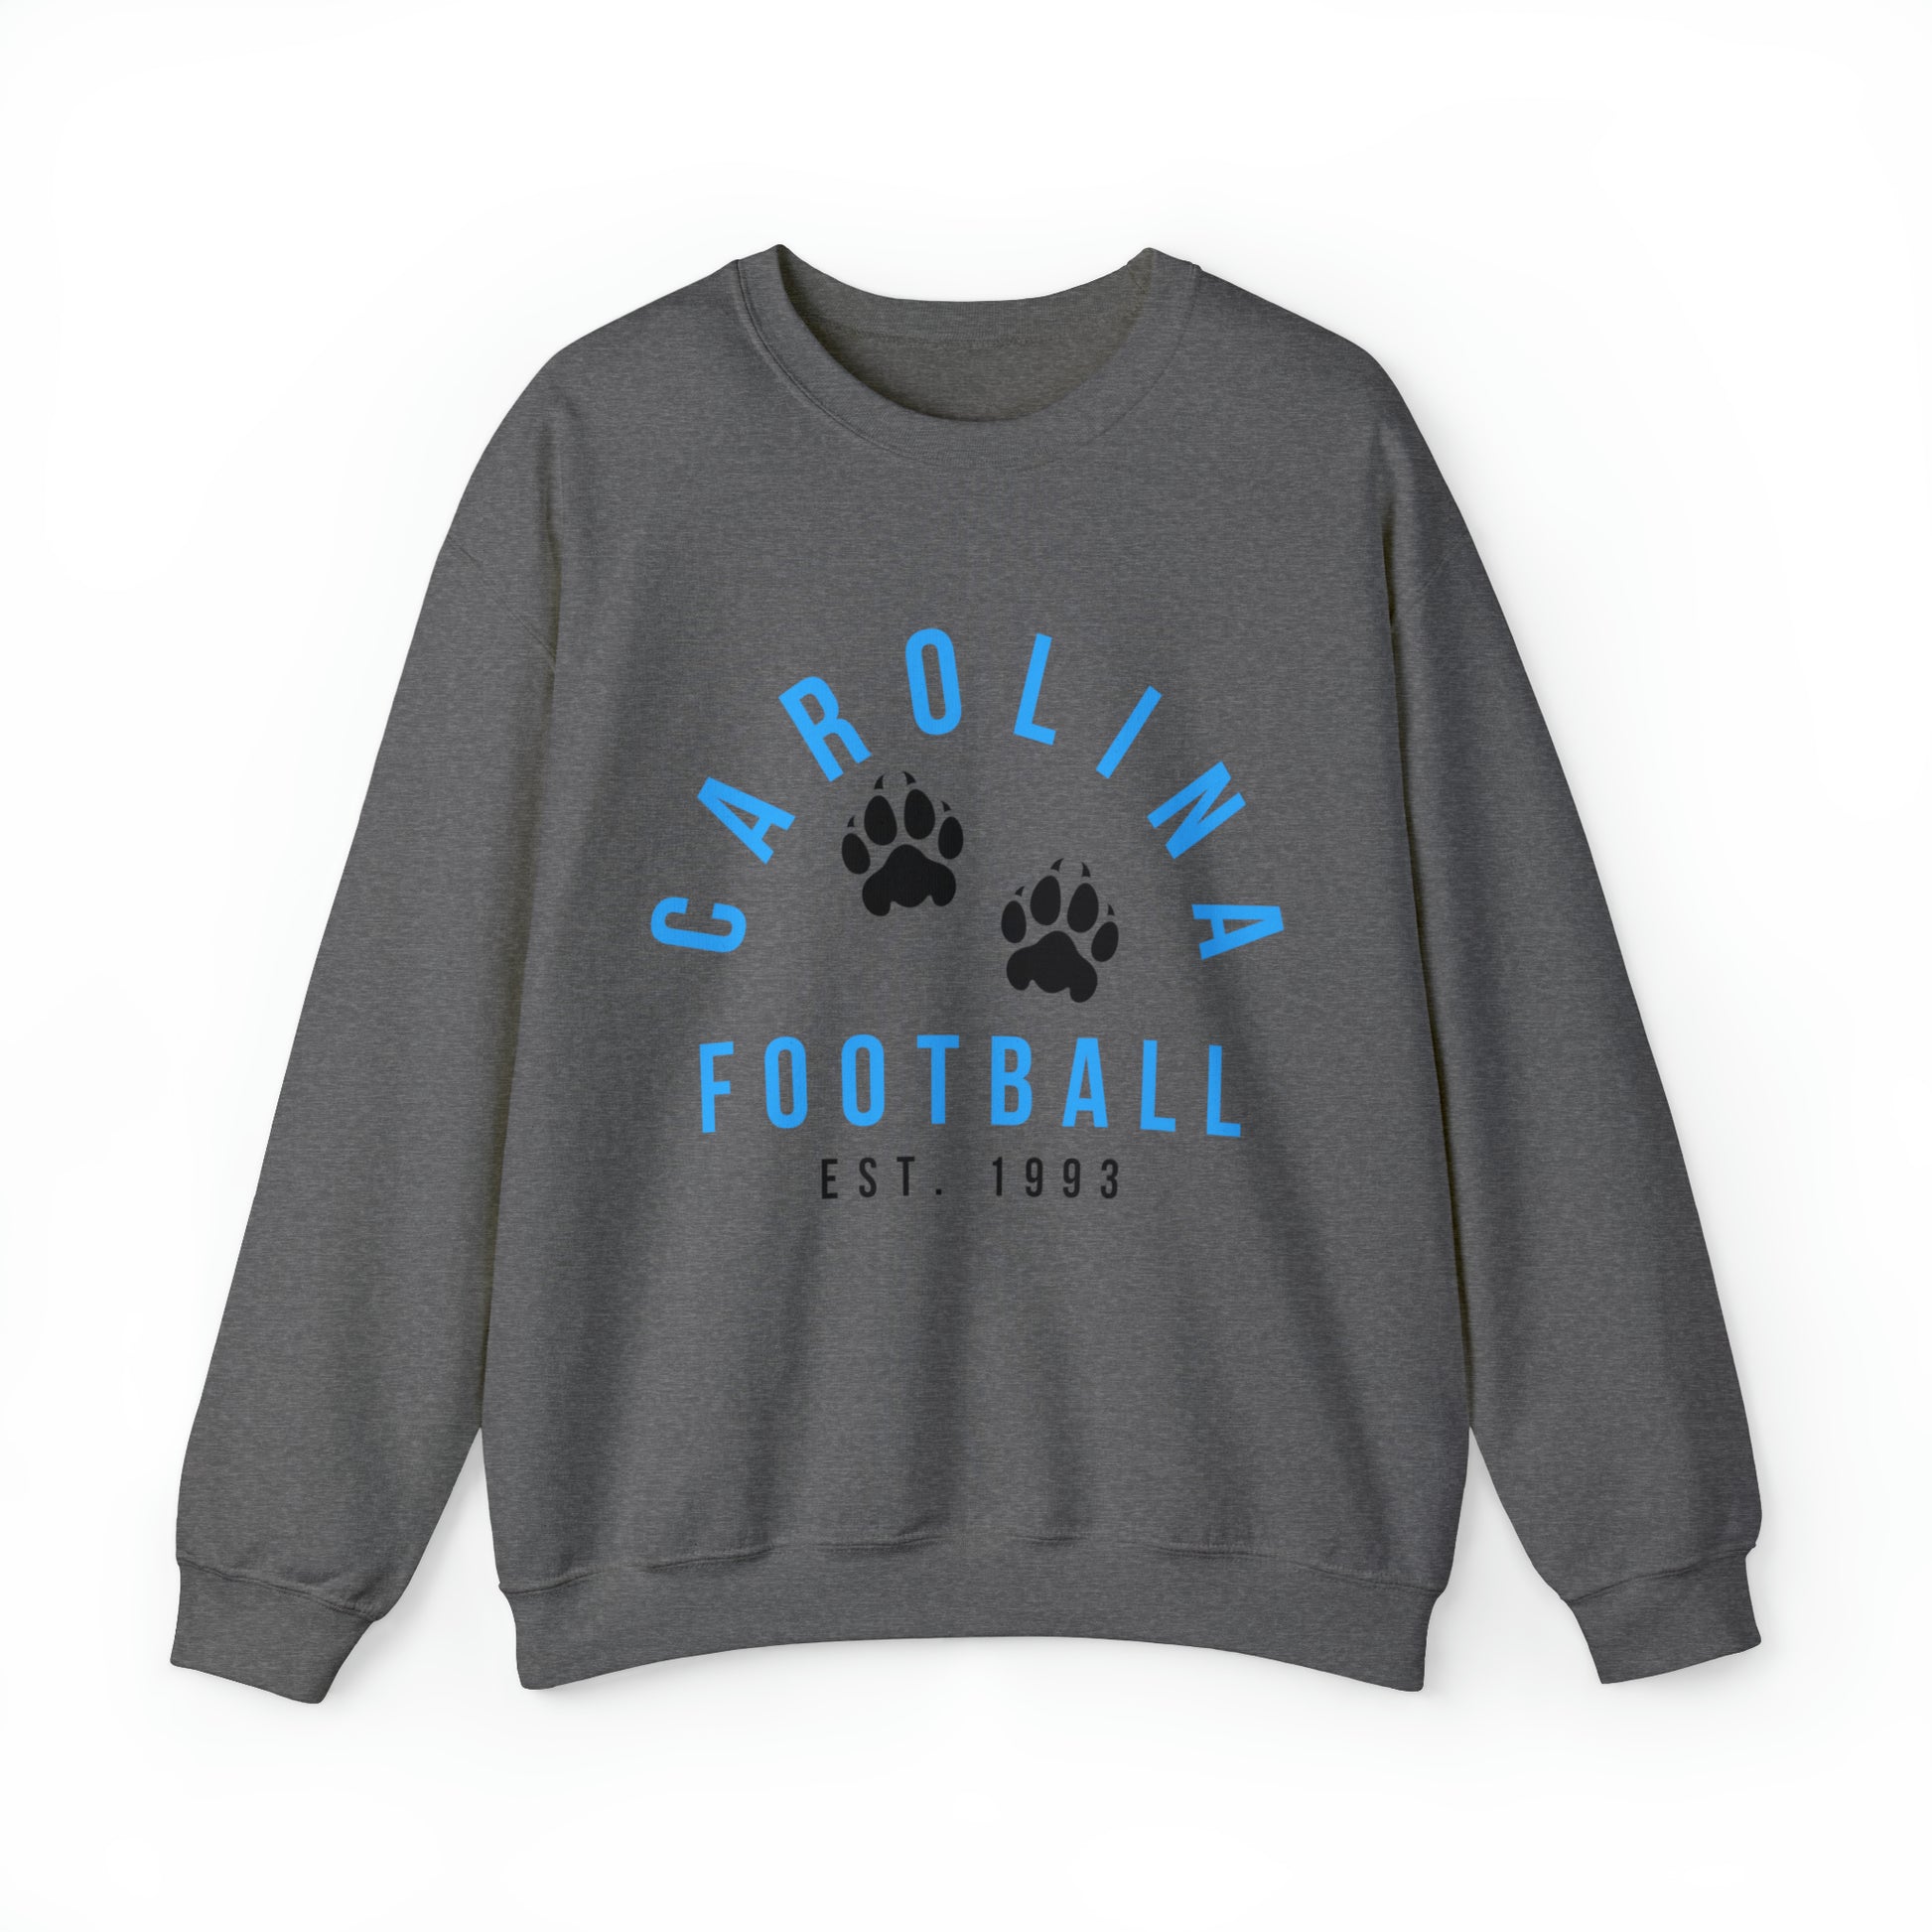 Black Carolina Panthers Crewneck Sweatshirt - Retro NFL Football Hoodie Apparel - Vintage Men's and Women's - Design 4